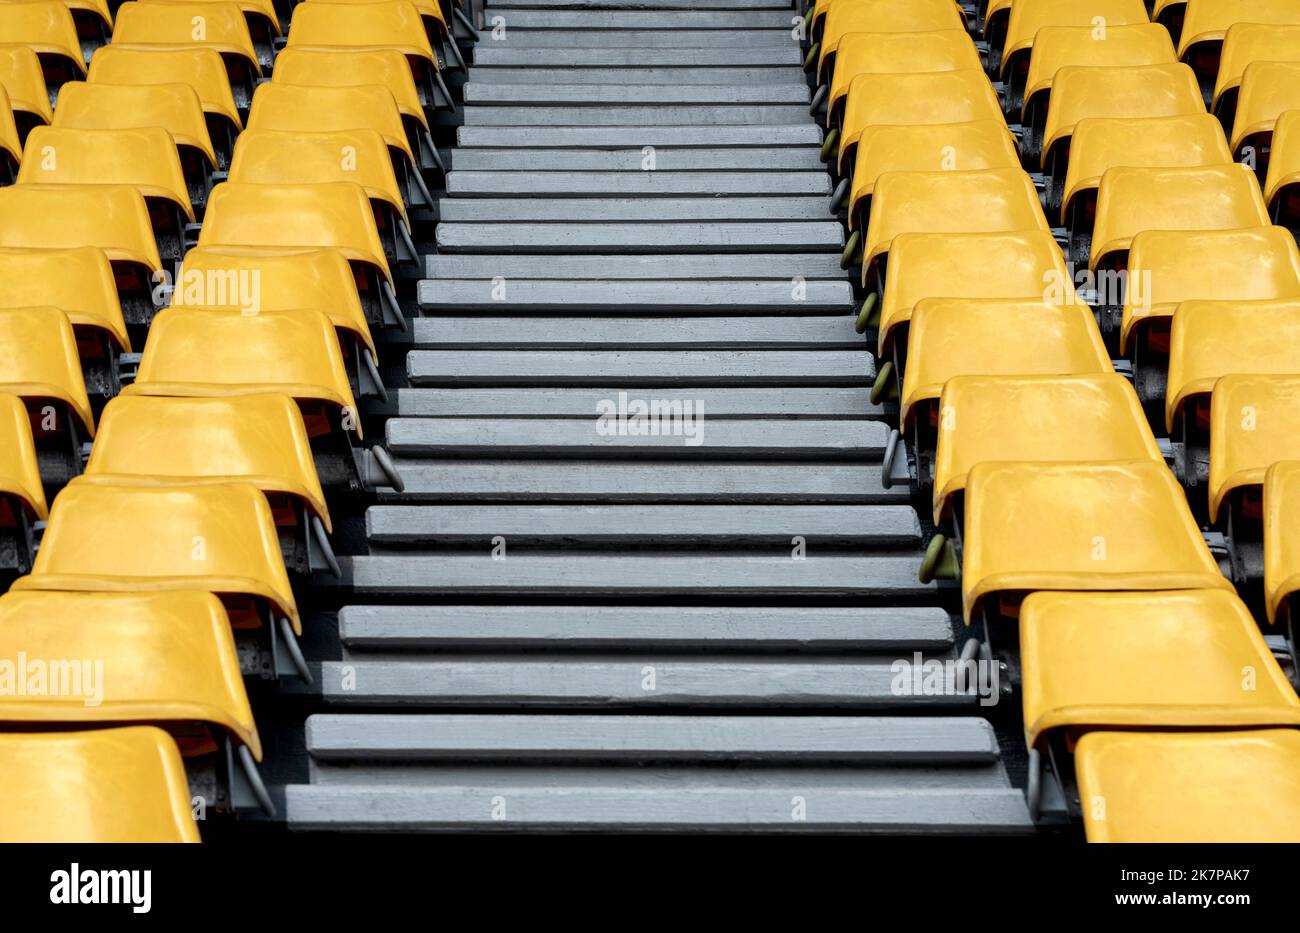 An den Tribünen der Signal Iduna Arena - dem offiziellen Spielplatz des FC Borussia Dortmund Stockfoto